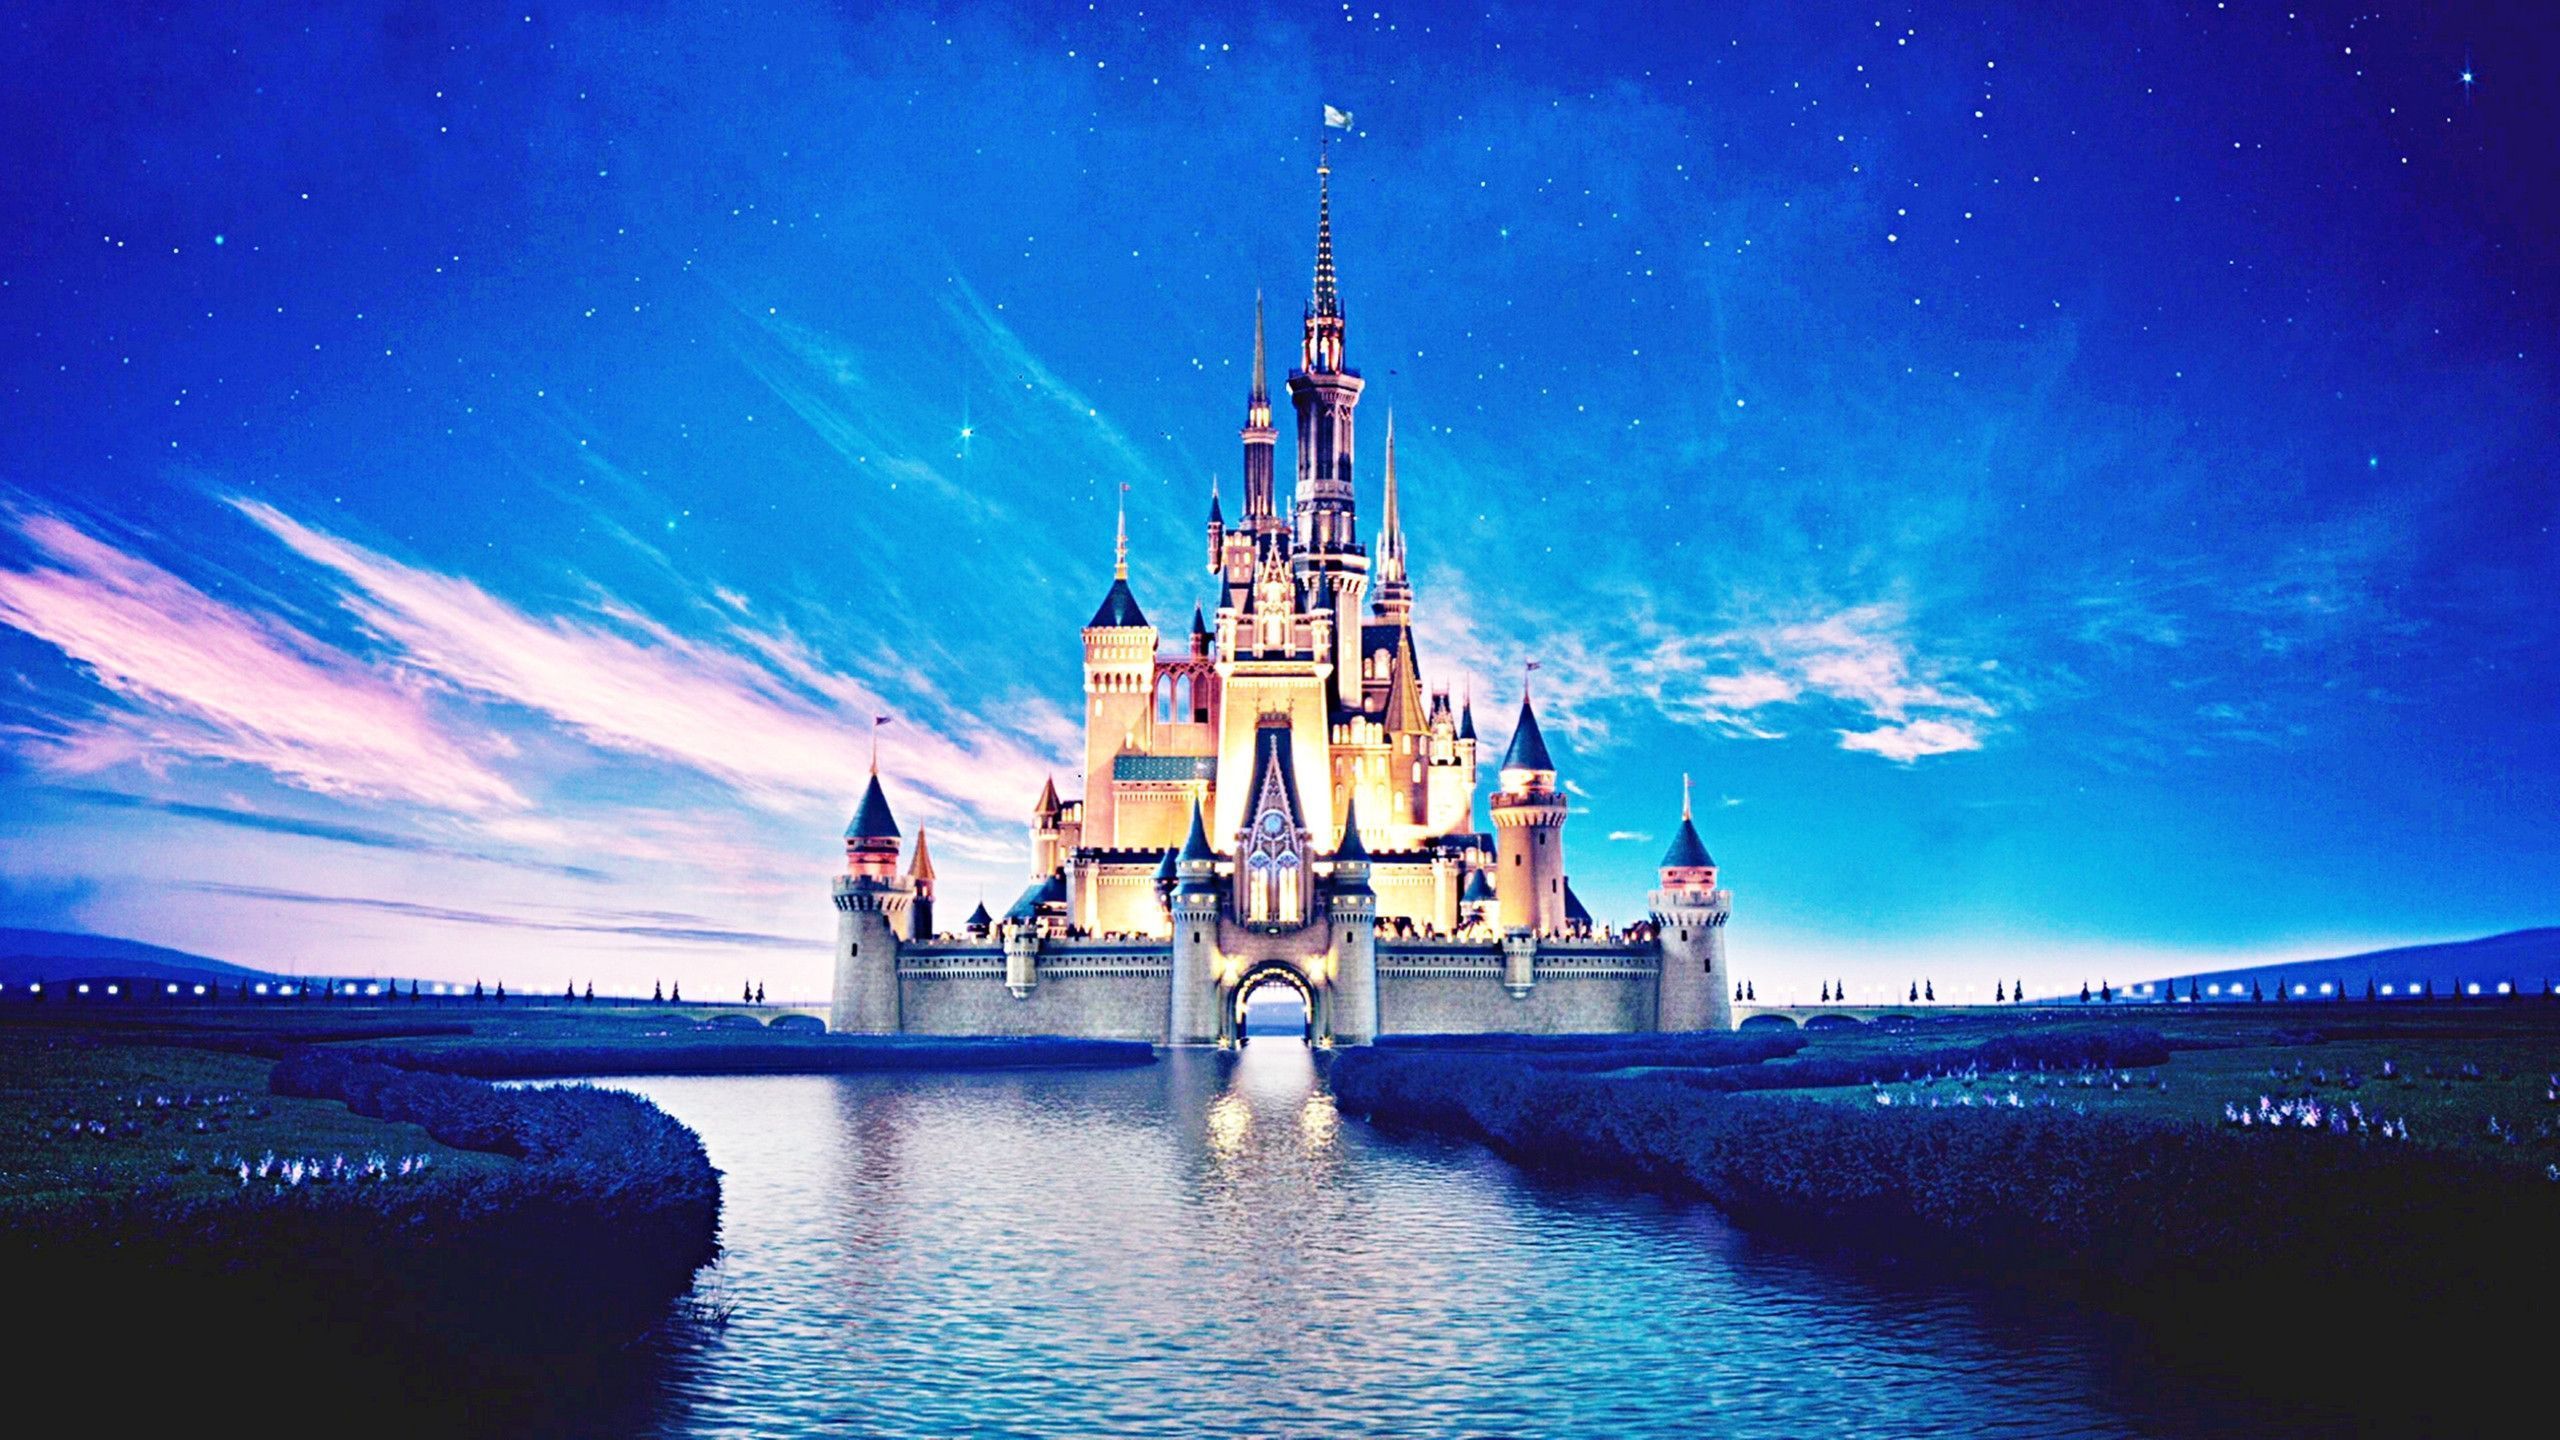 Walt Disney World Wallpapers and Background Images   stmednet